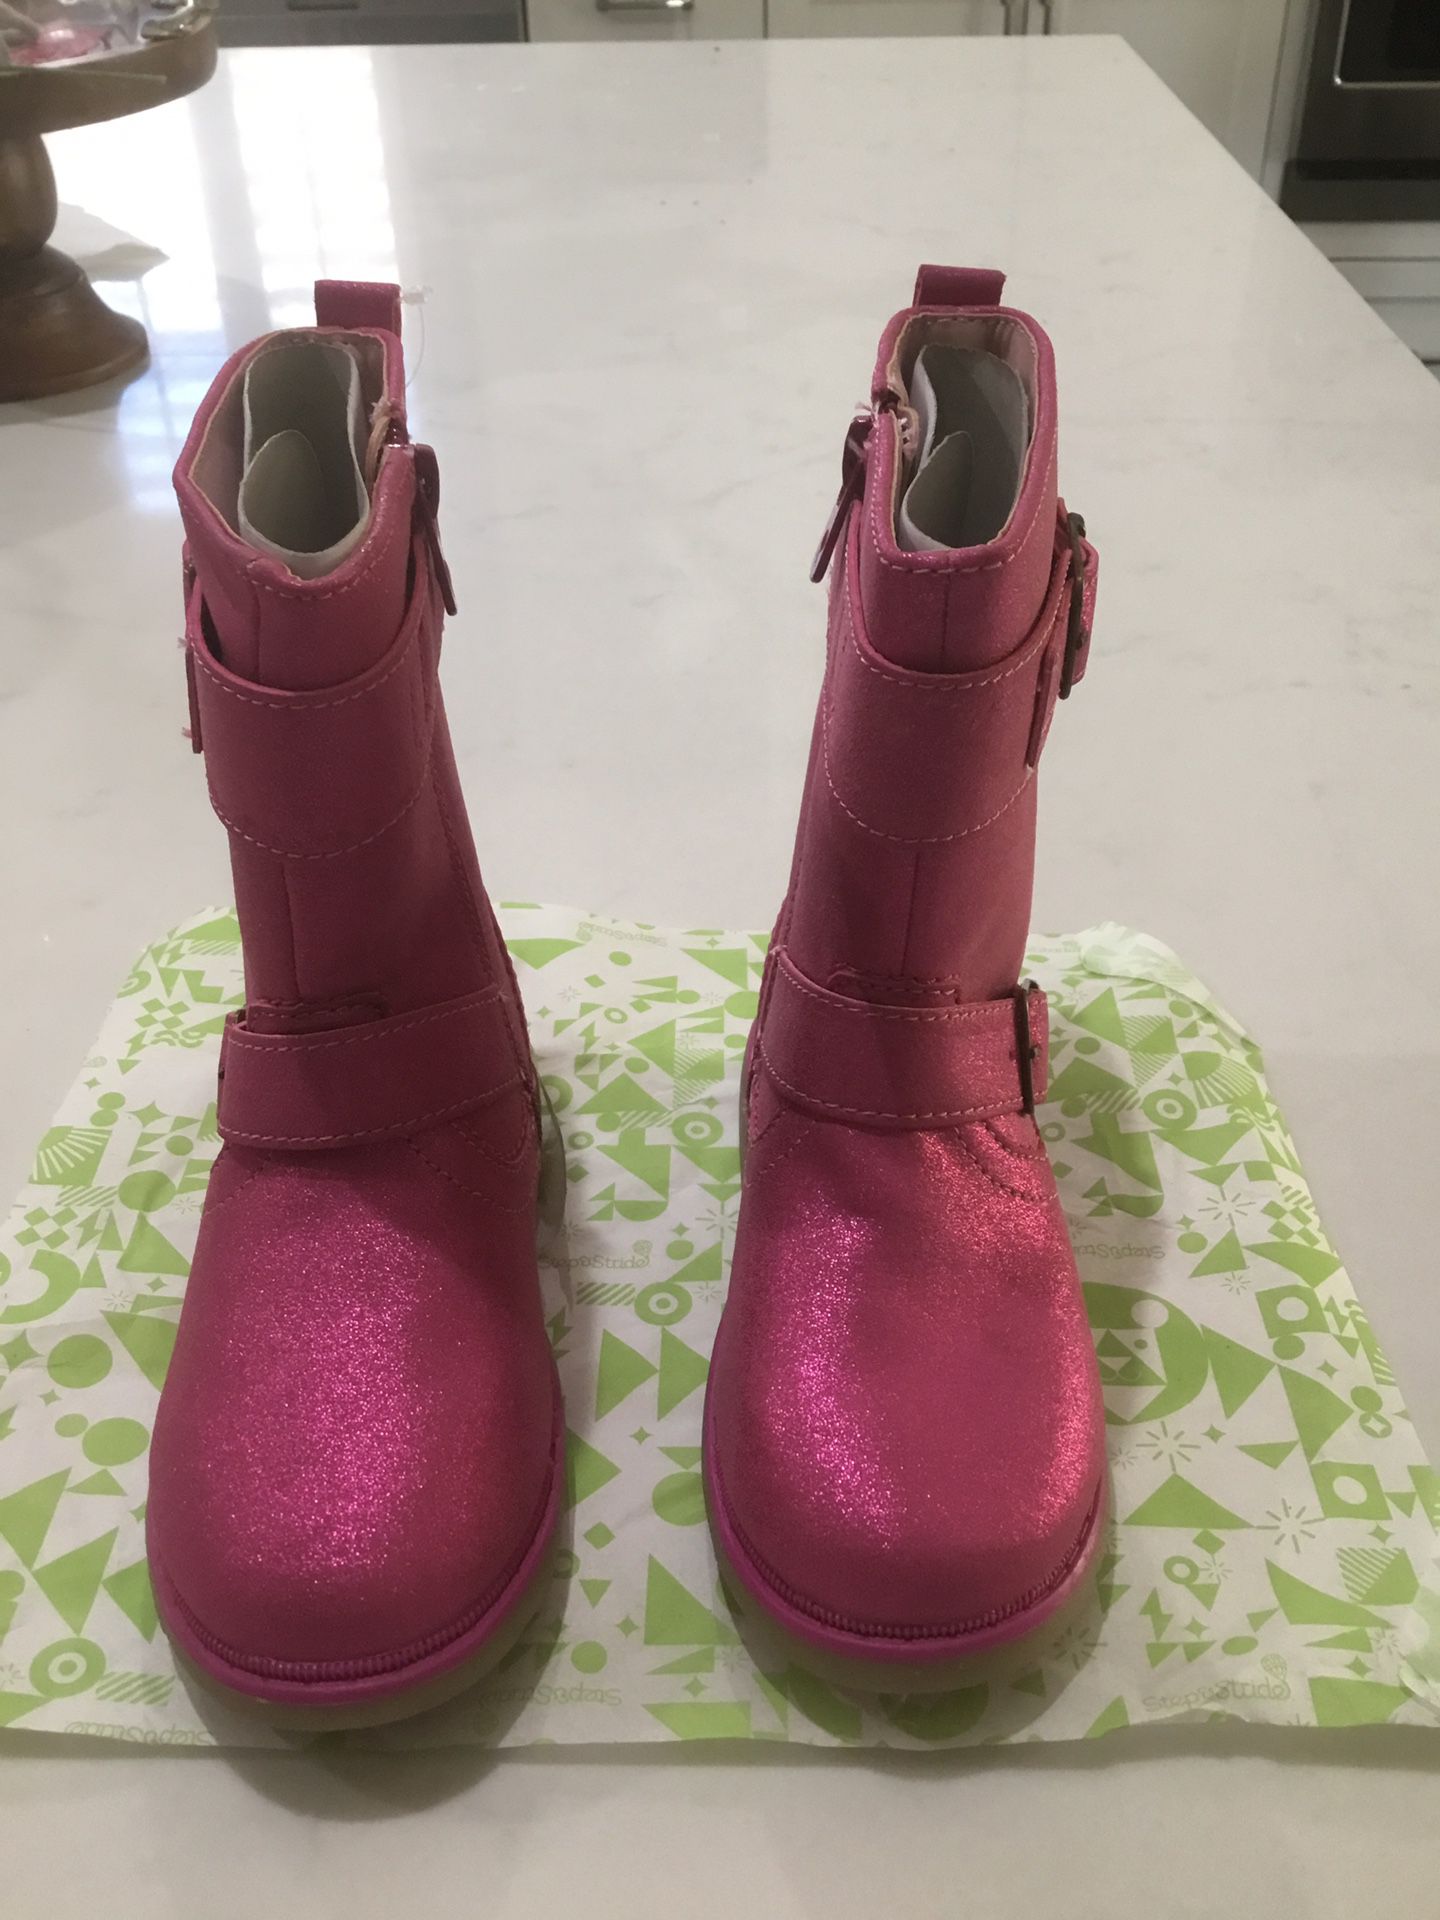 Toddler size 10 Girls Pink Step & Stride Lara Boots (never worn, shoes, footwear)